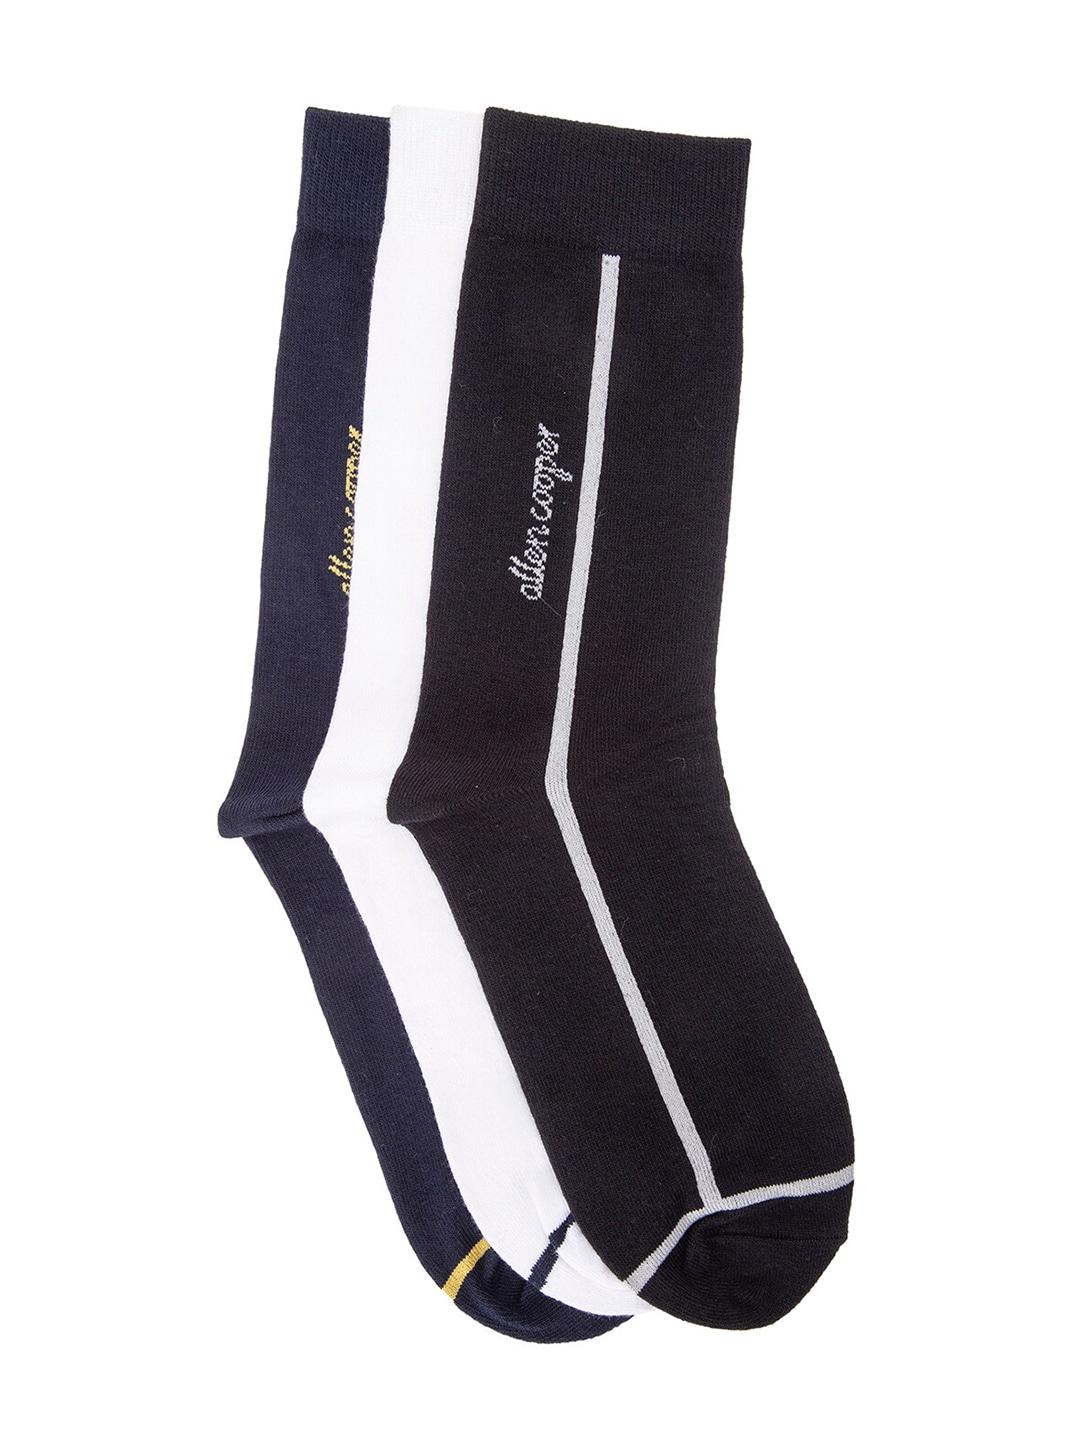 allen-cooper-men-pack-of-3-assorted-calf-length-socks